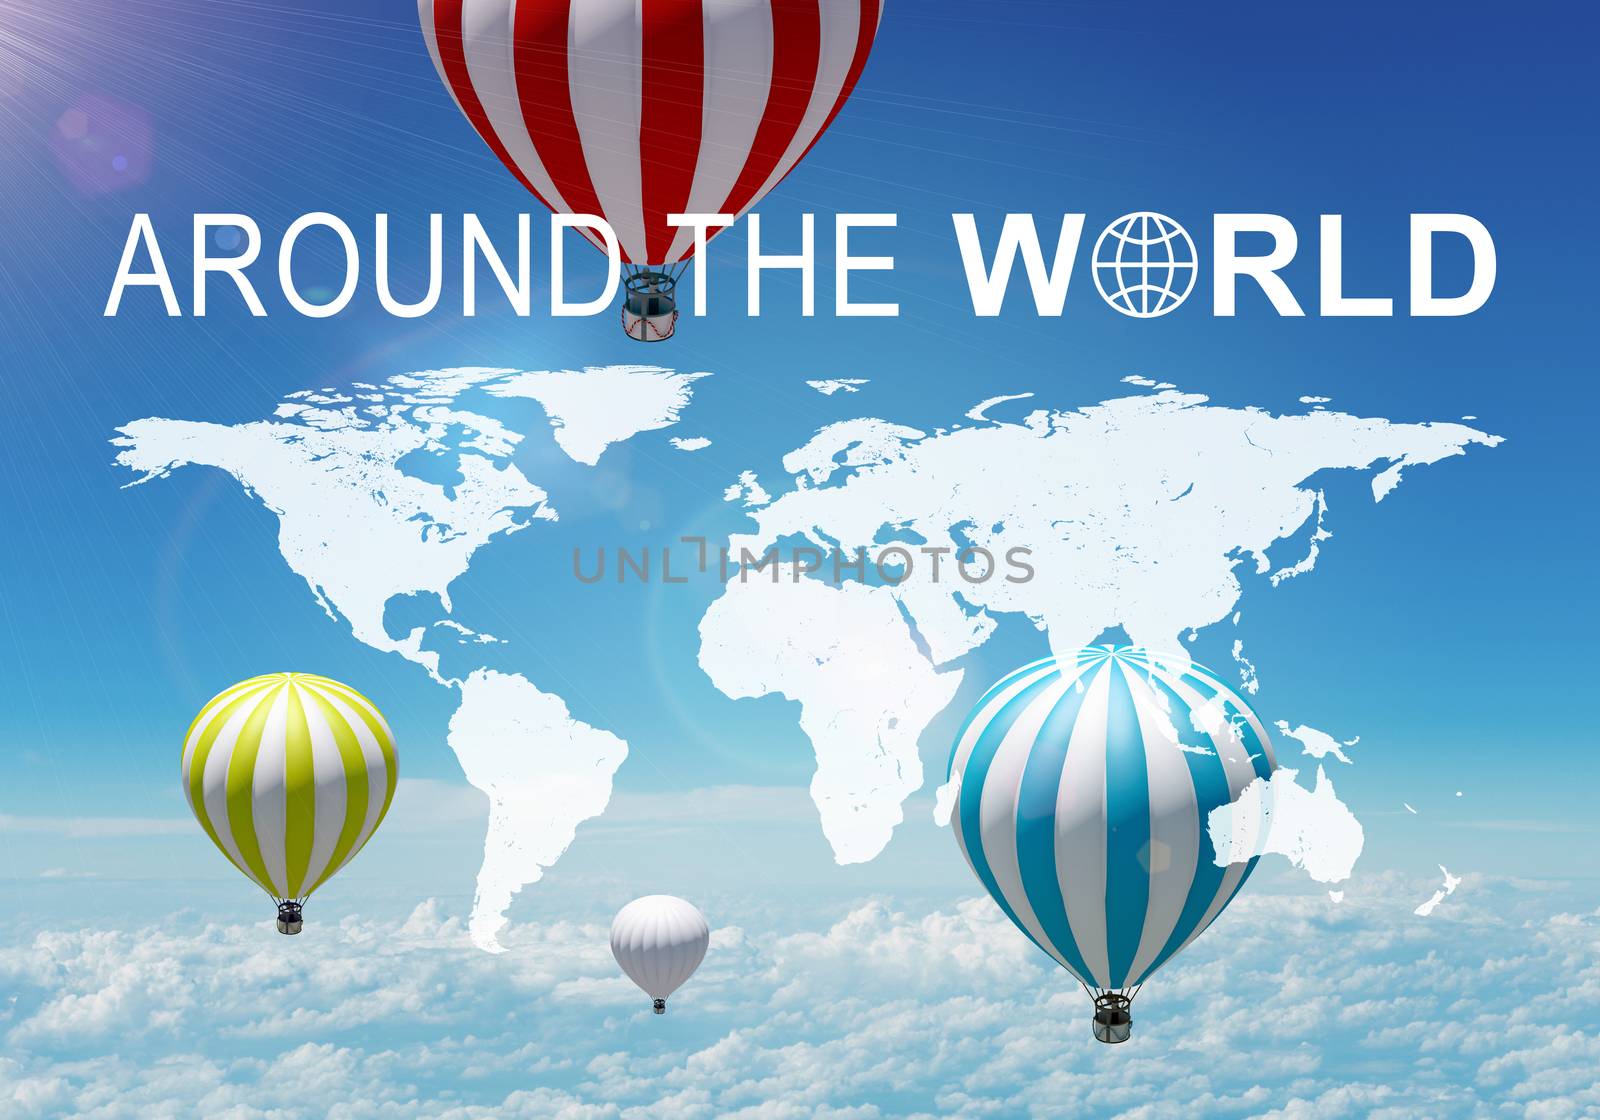 Around The World header by cherezoff